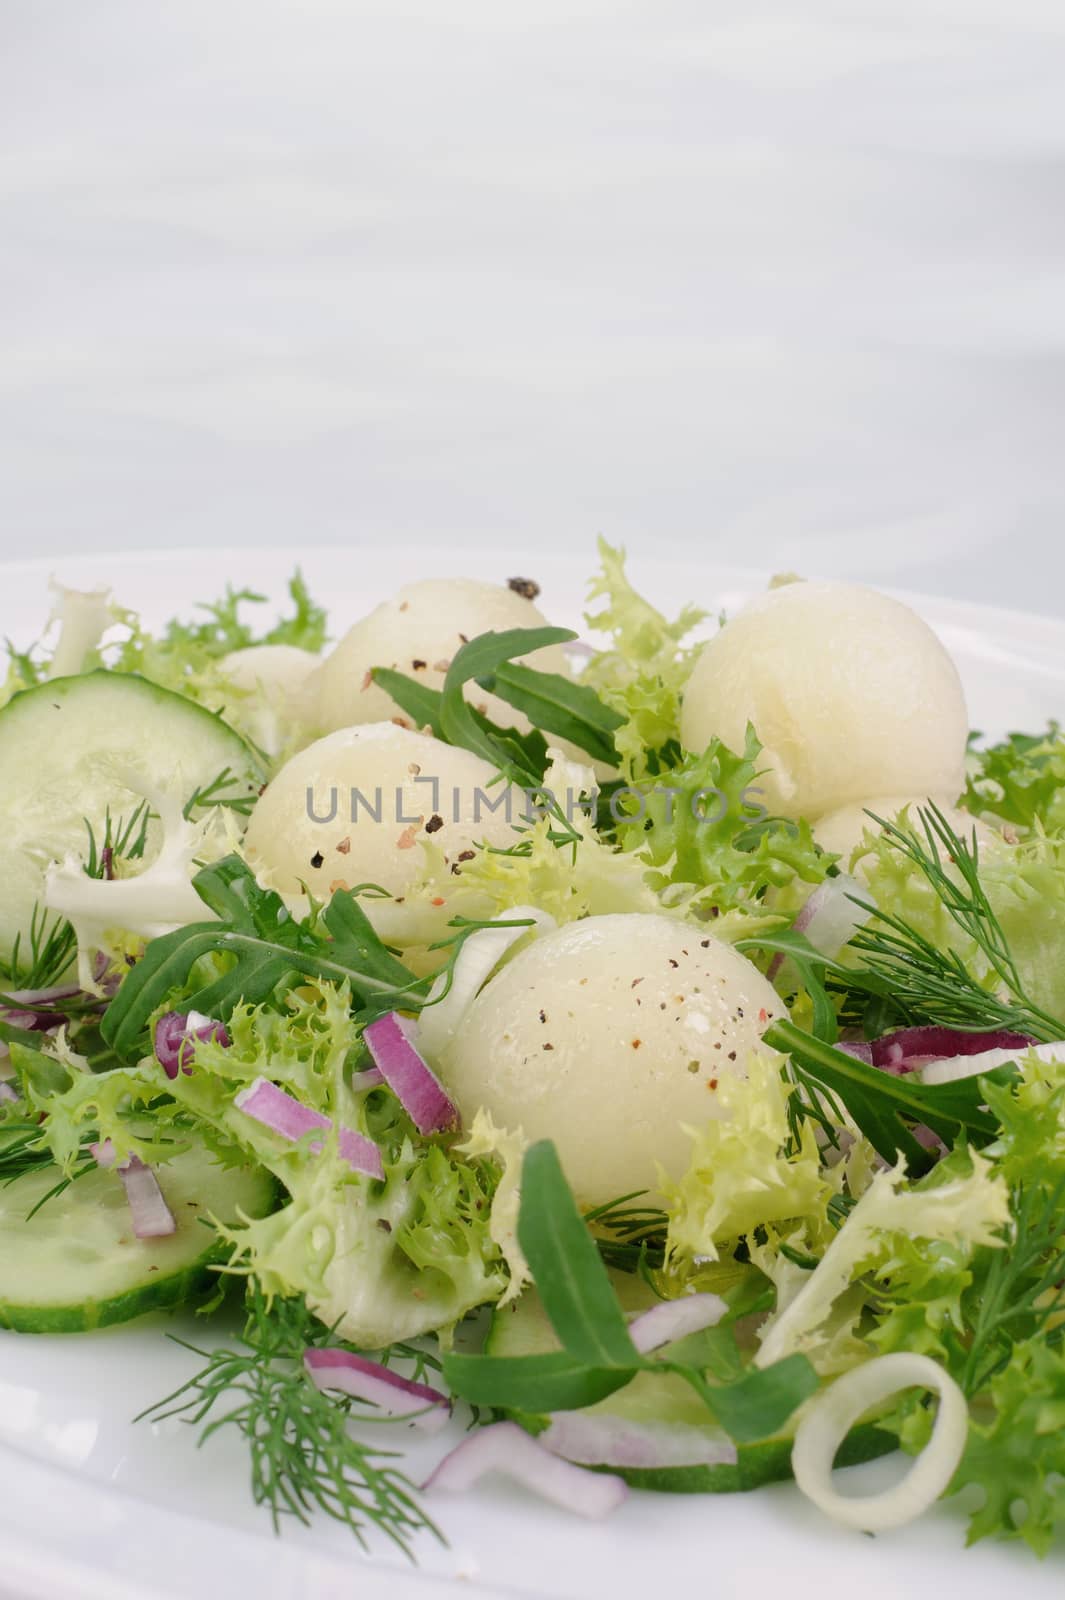 Arugula salad with cucumber with melon balls